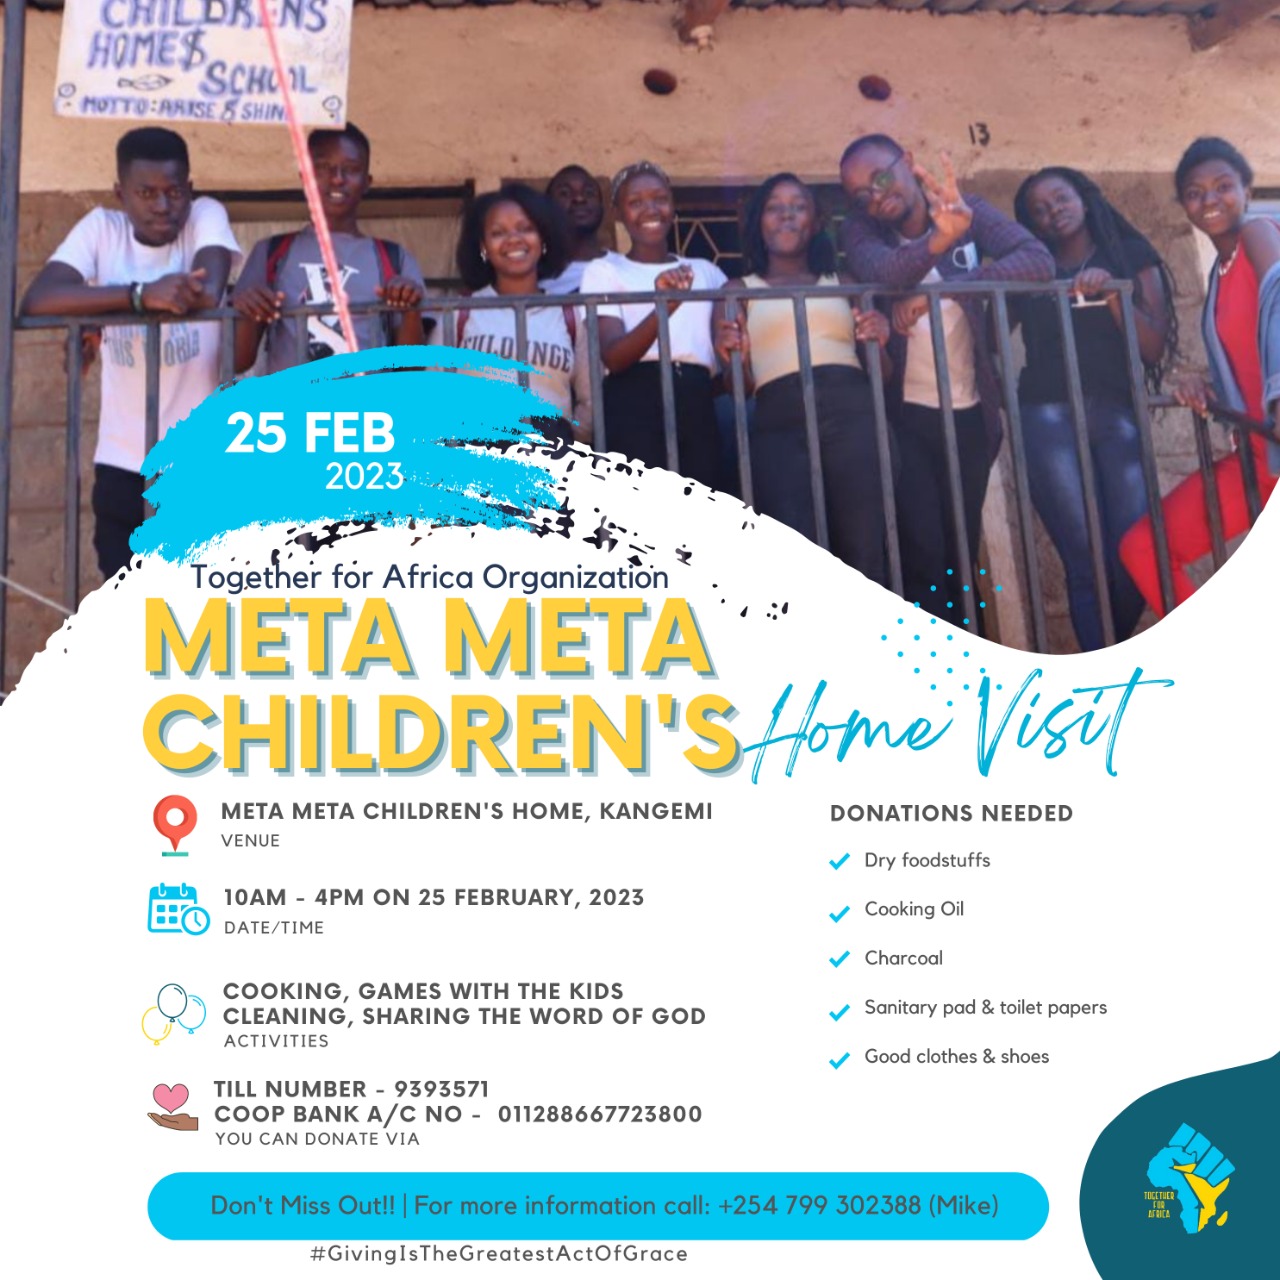 Meta Meta Children's Home Visit